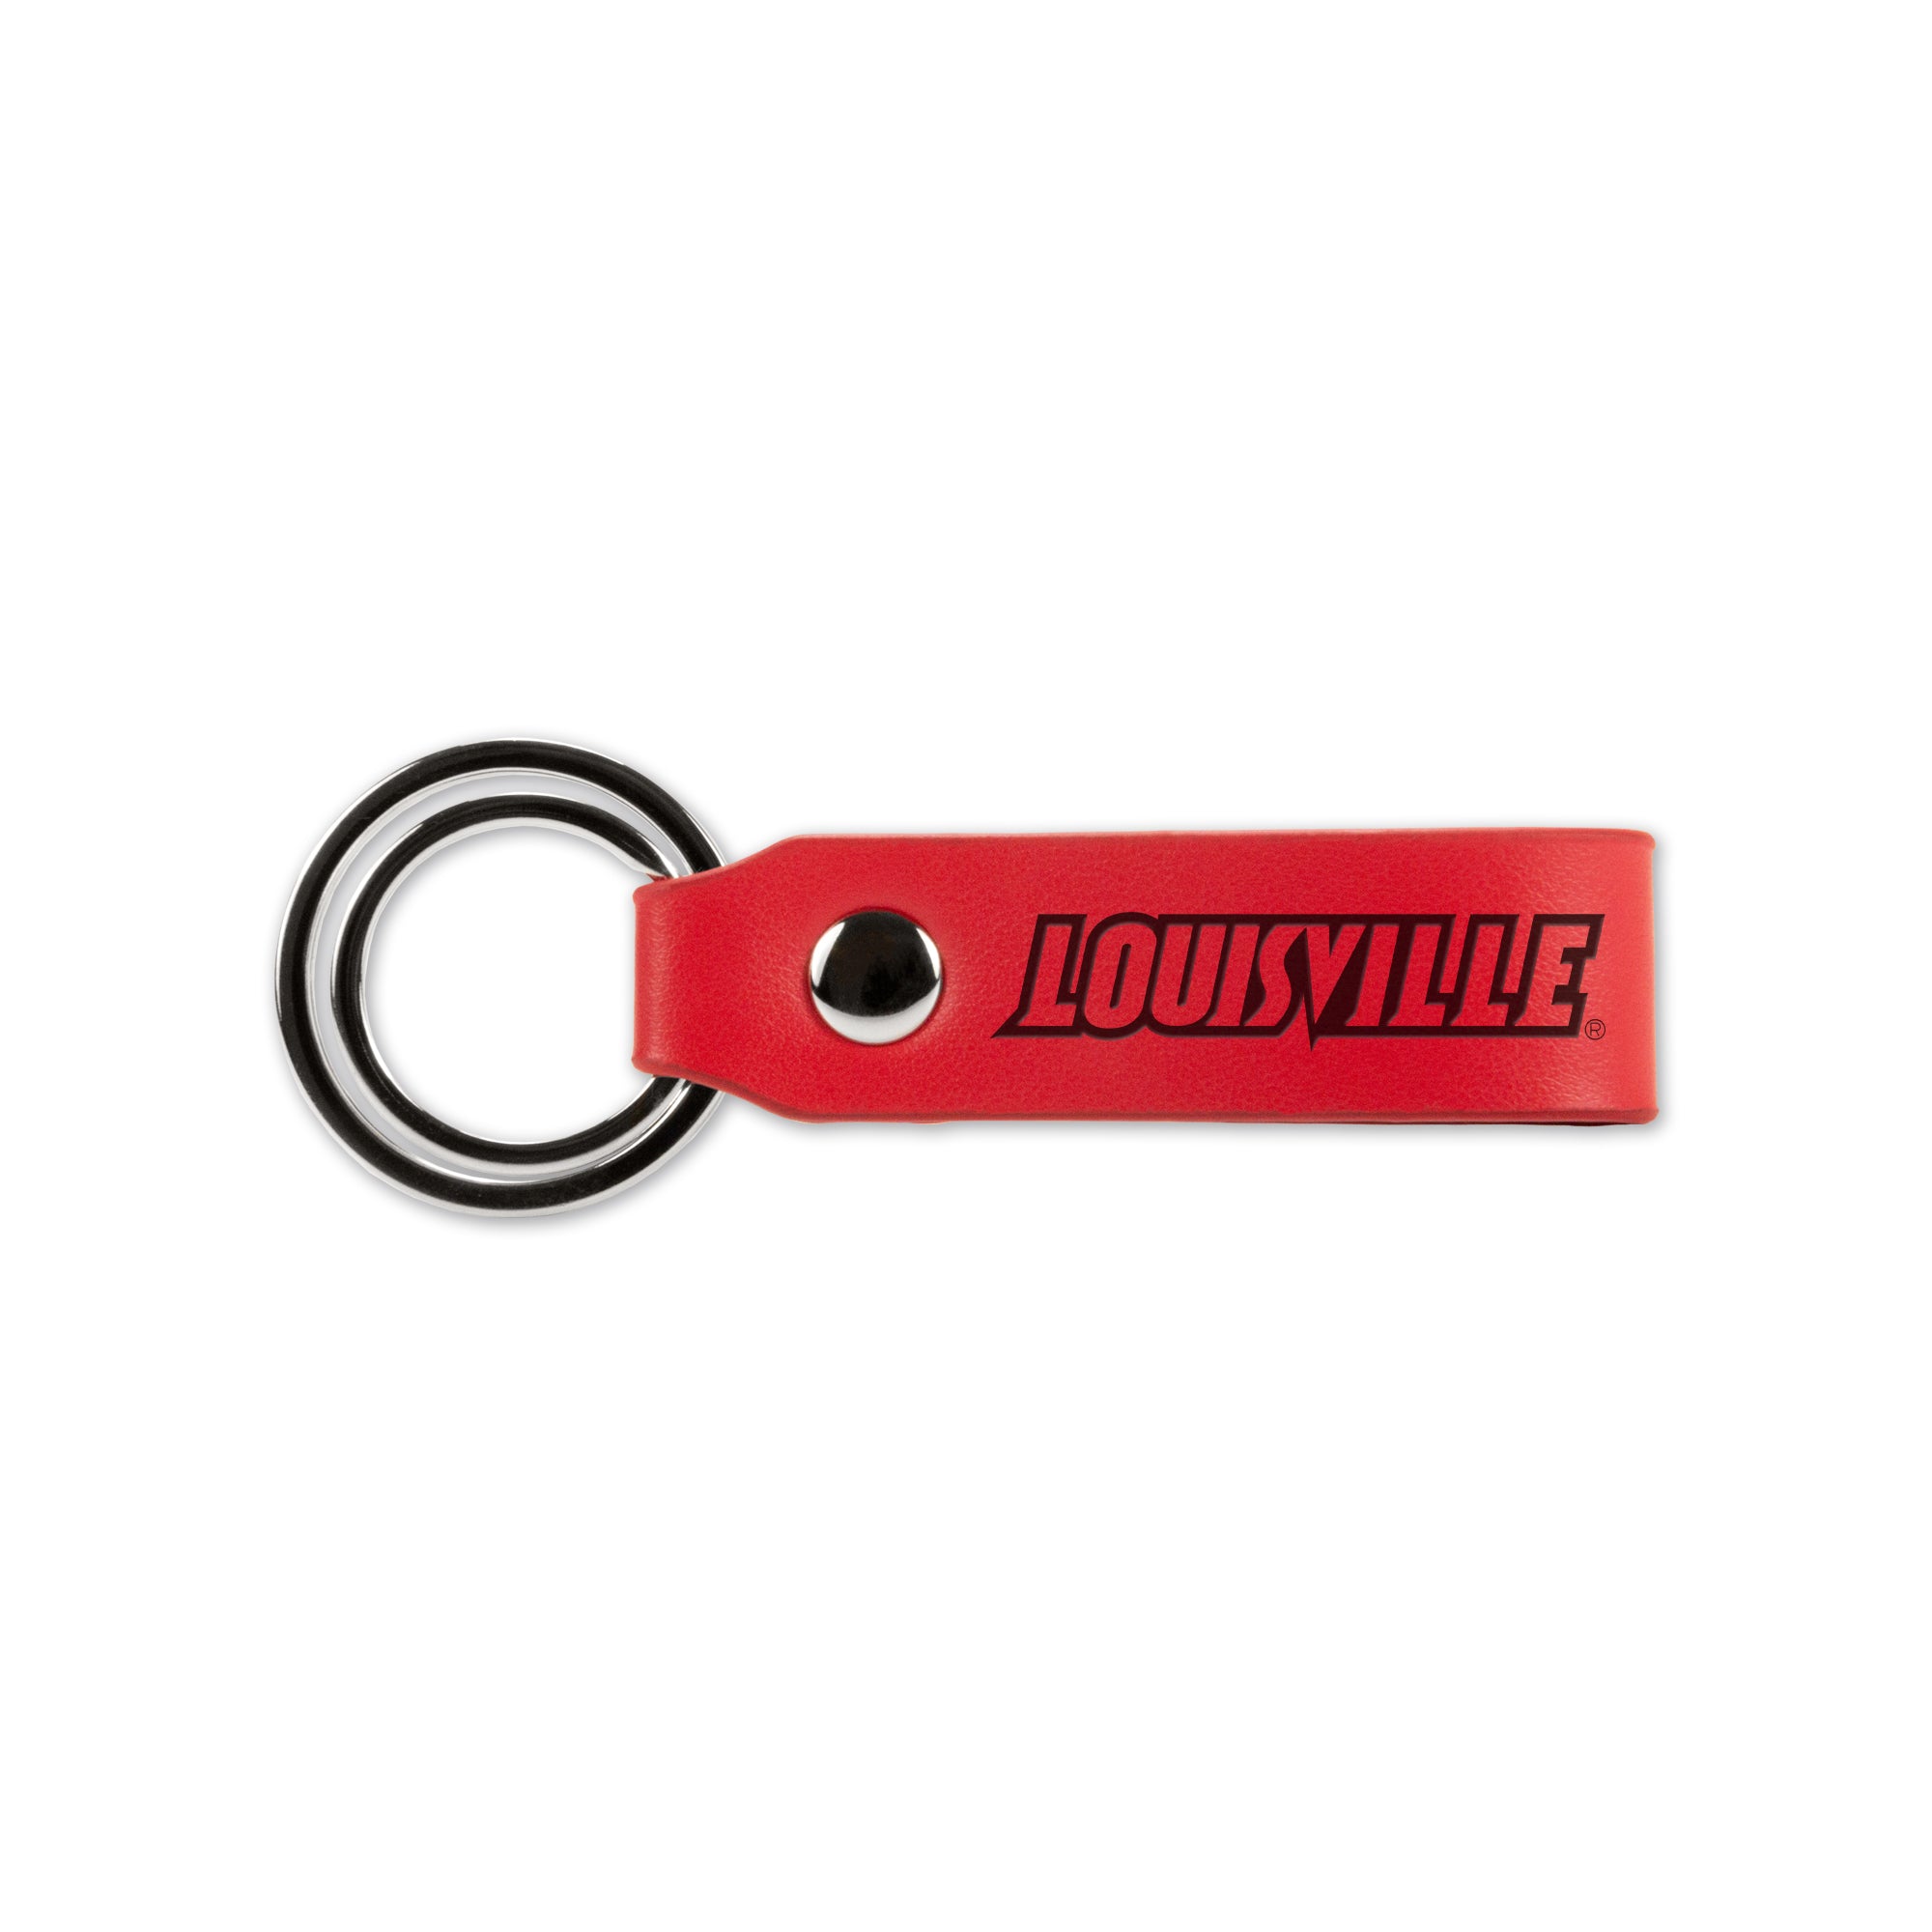 Louisville Cardinal Keychain | Zazzle